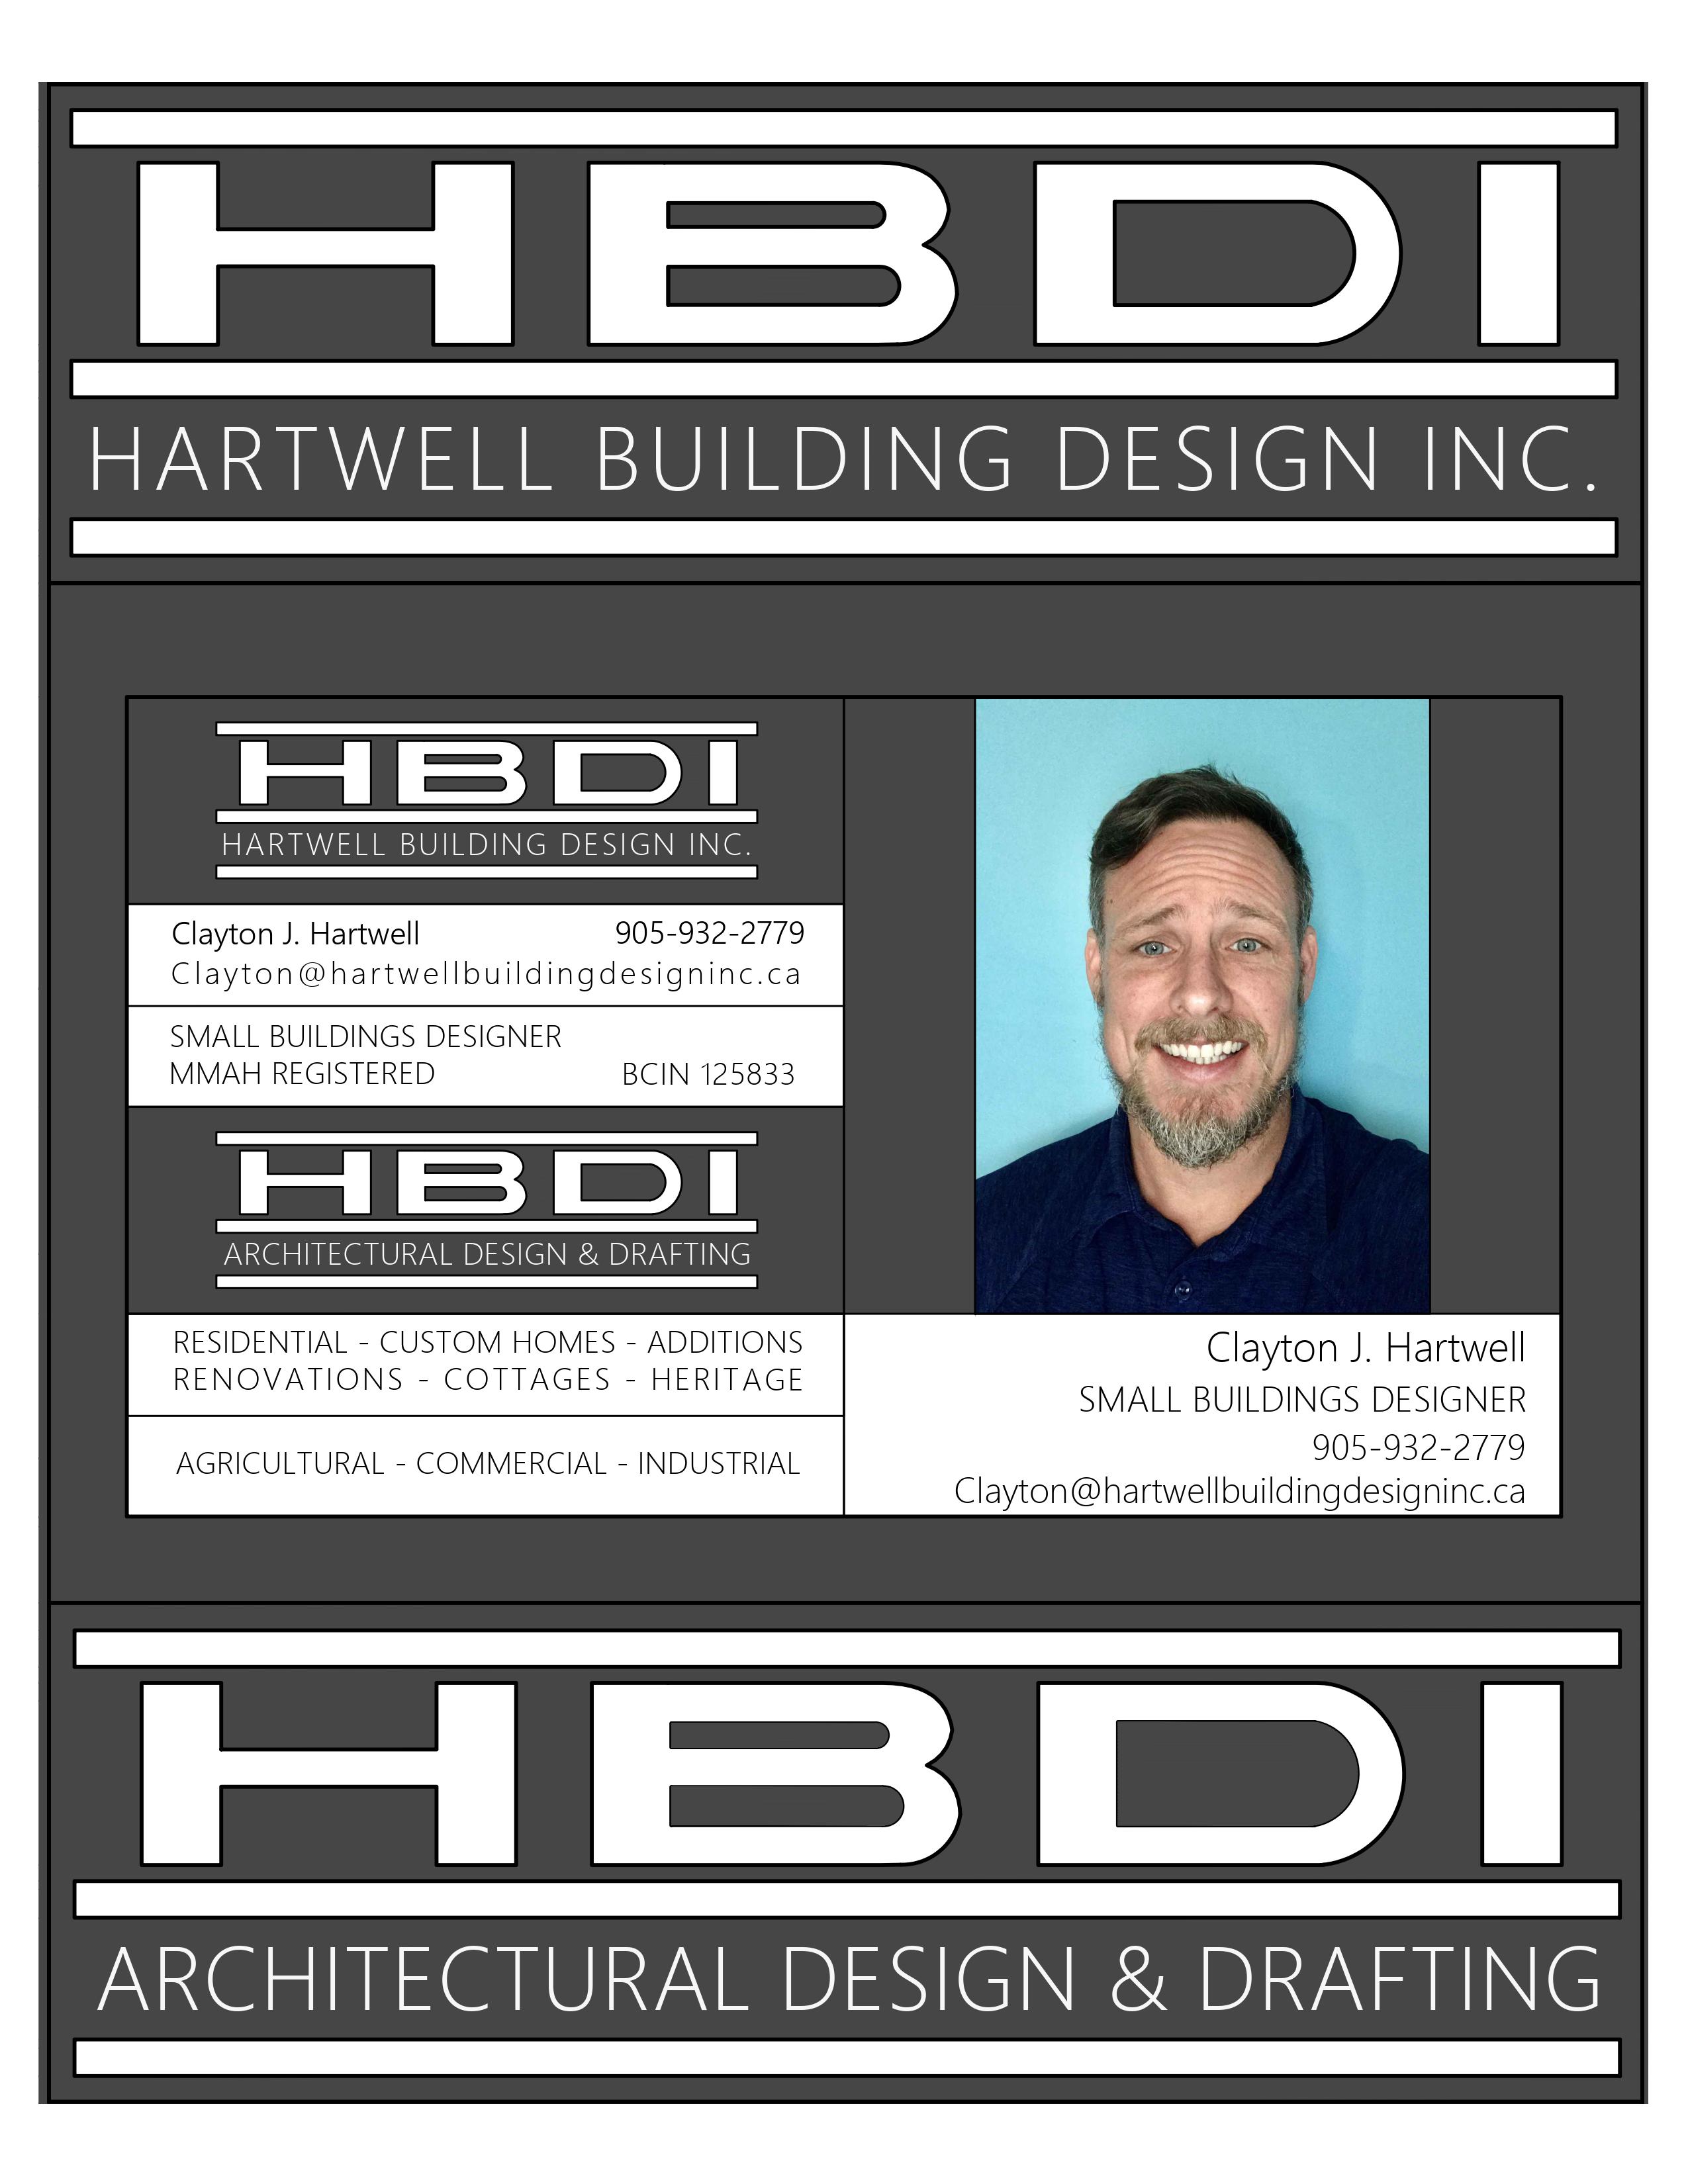 Hartwell Building Design Inc.